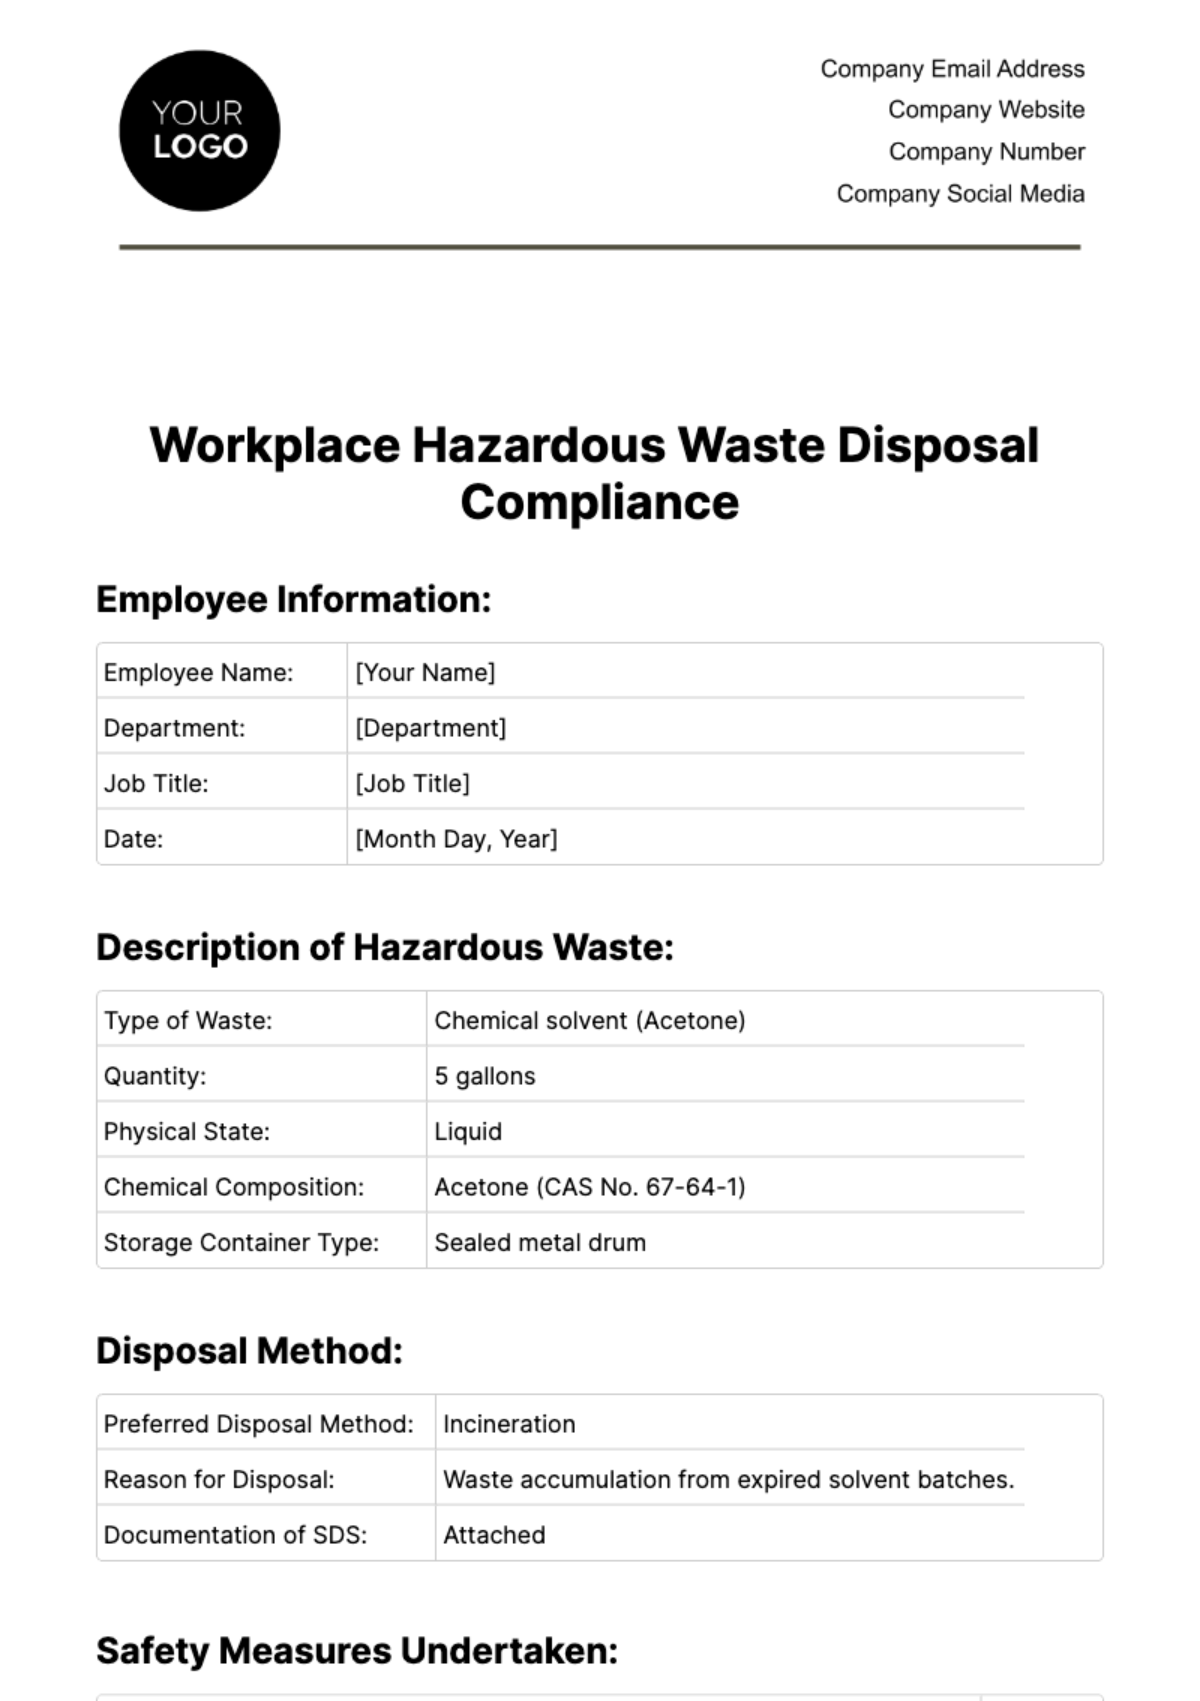 Workplace Hazardous Waste Disposal Compliance Template